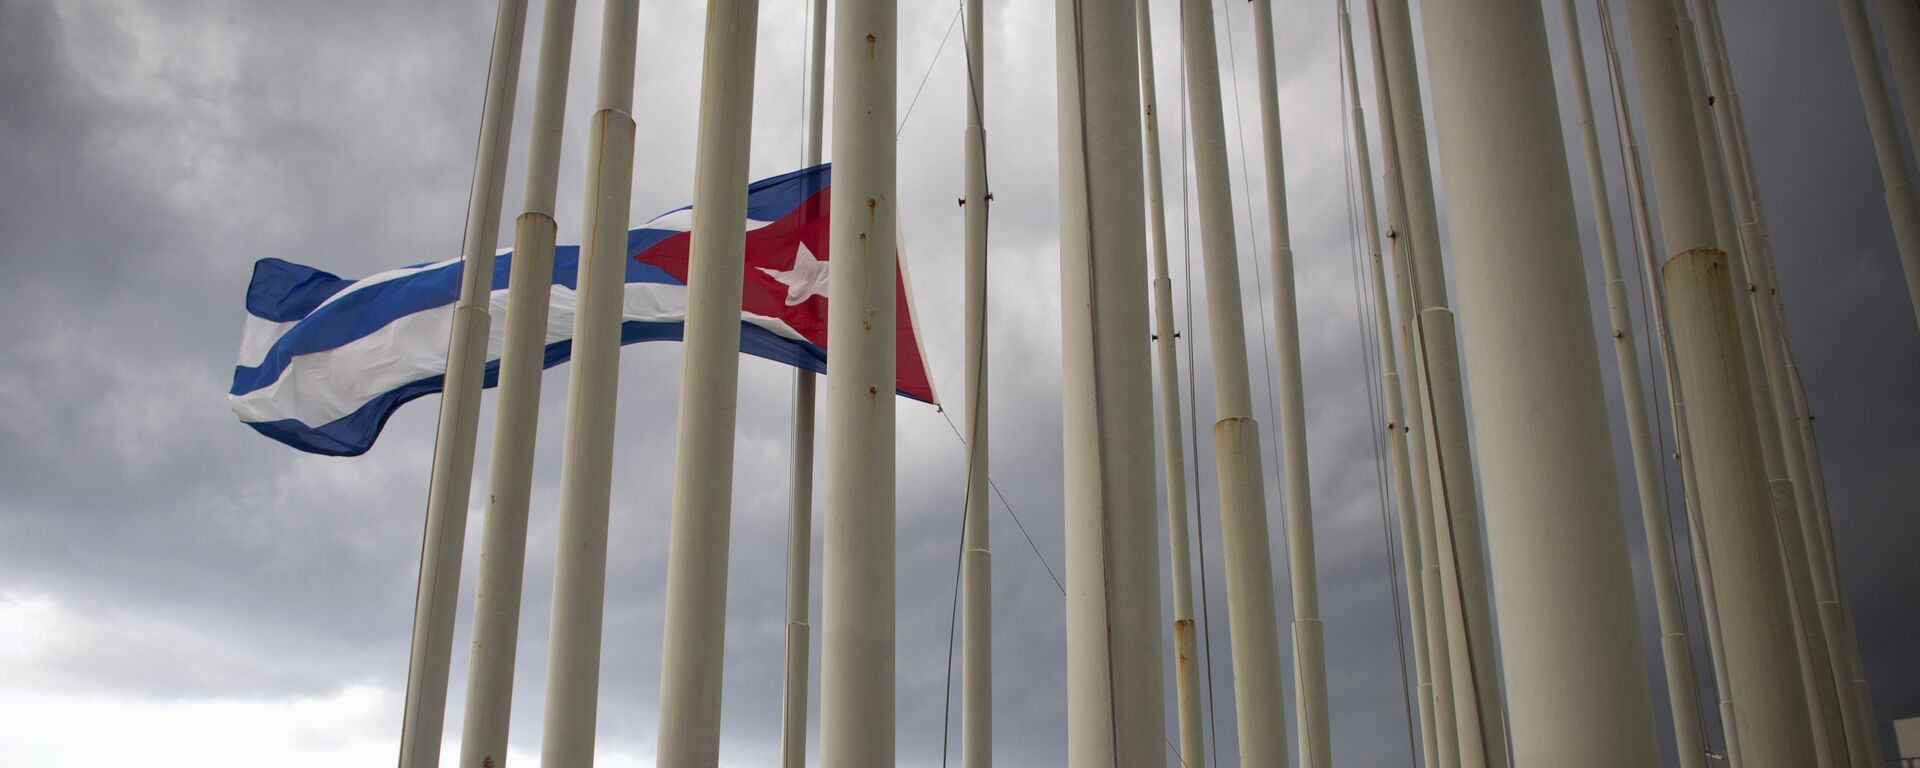 A man lowers the Cuban flag in Havana, August 15, 2015 - Sputnik Mundo, 1920, 19.04.2021